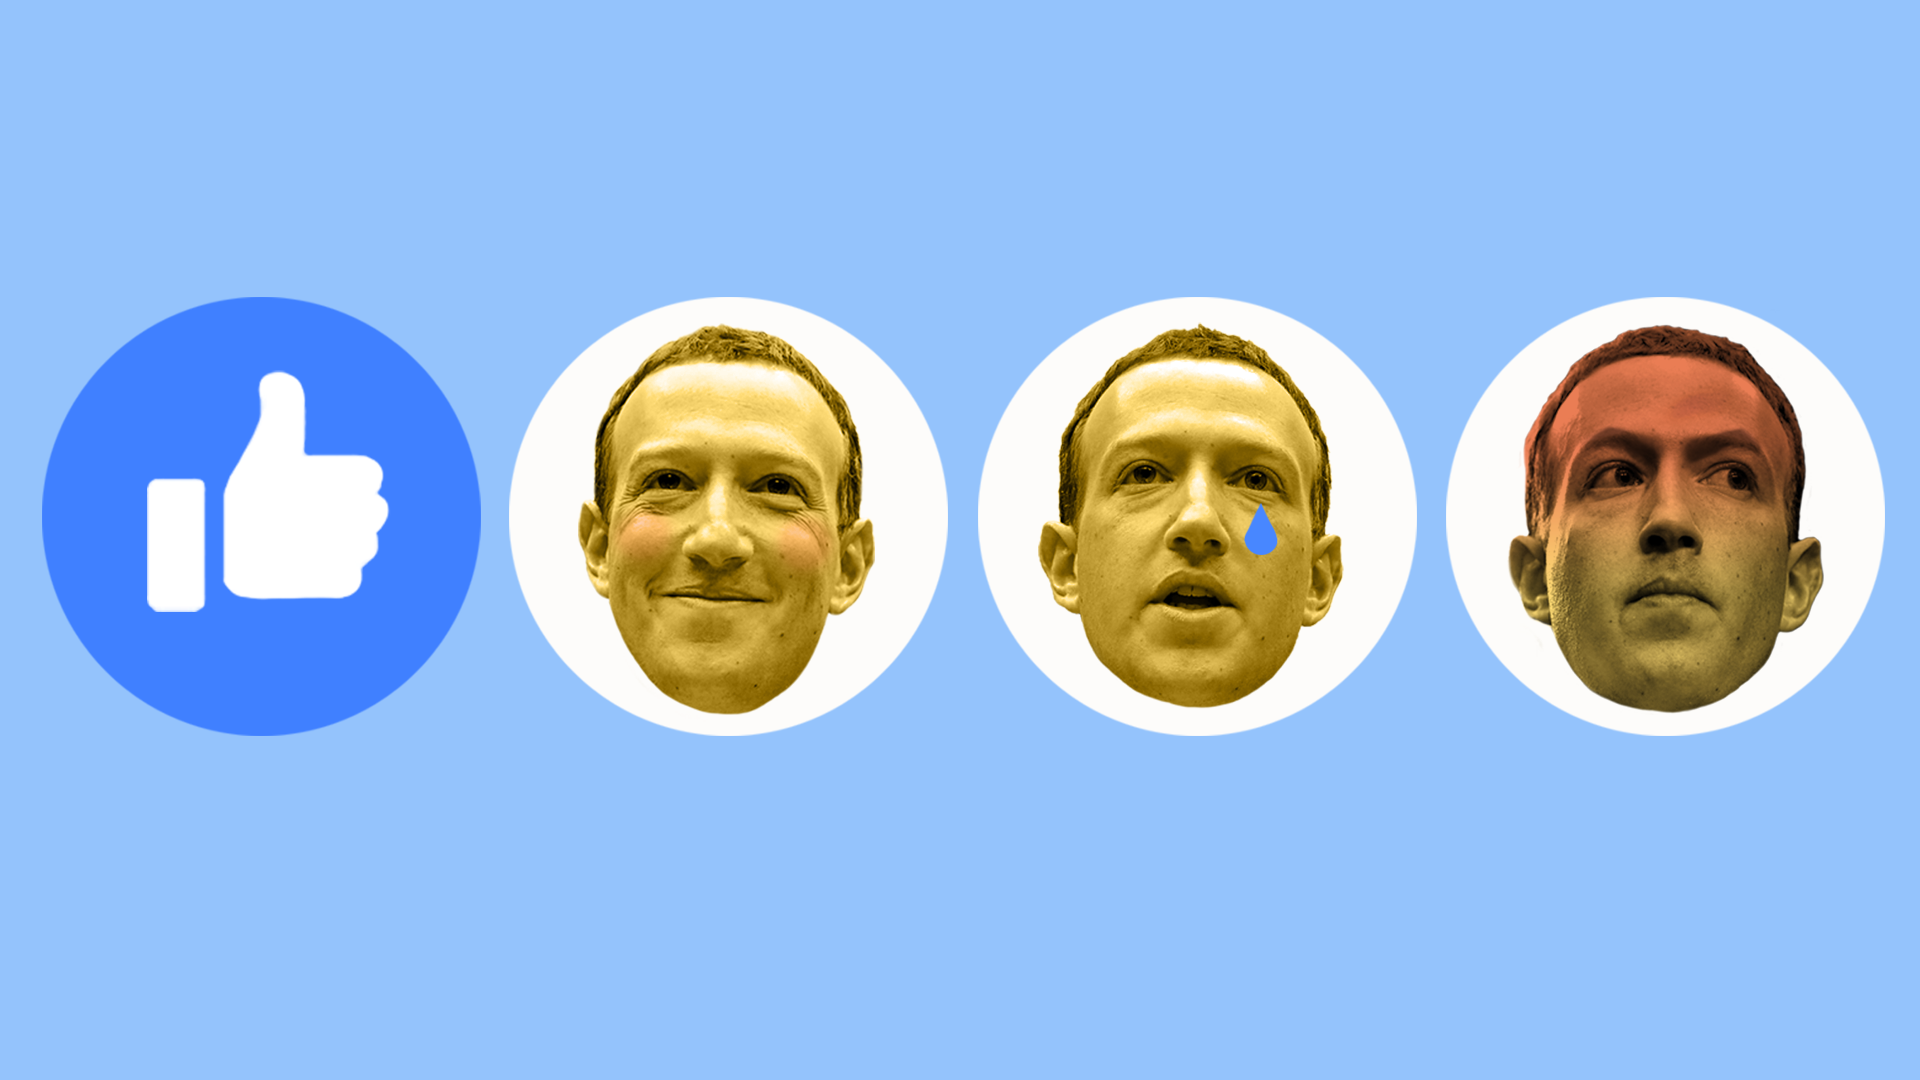 Mark Zuckerberg's face as emojis